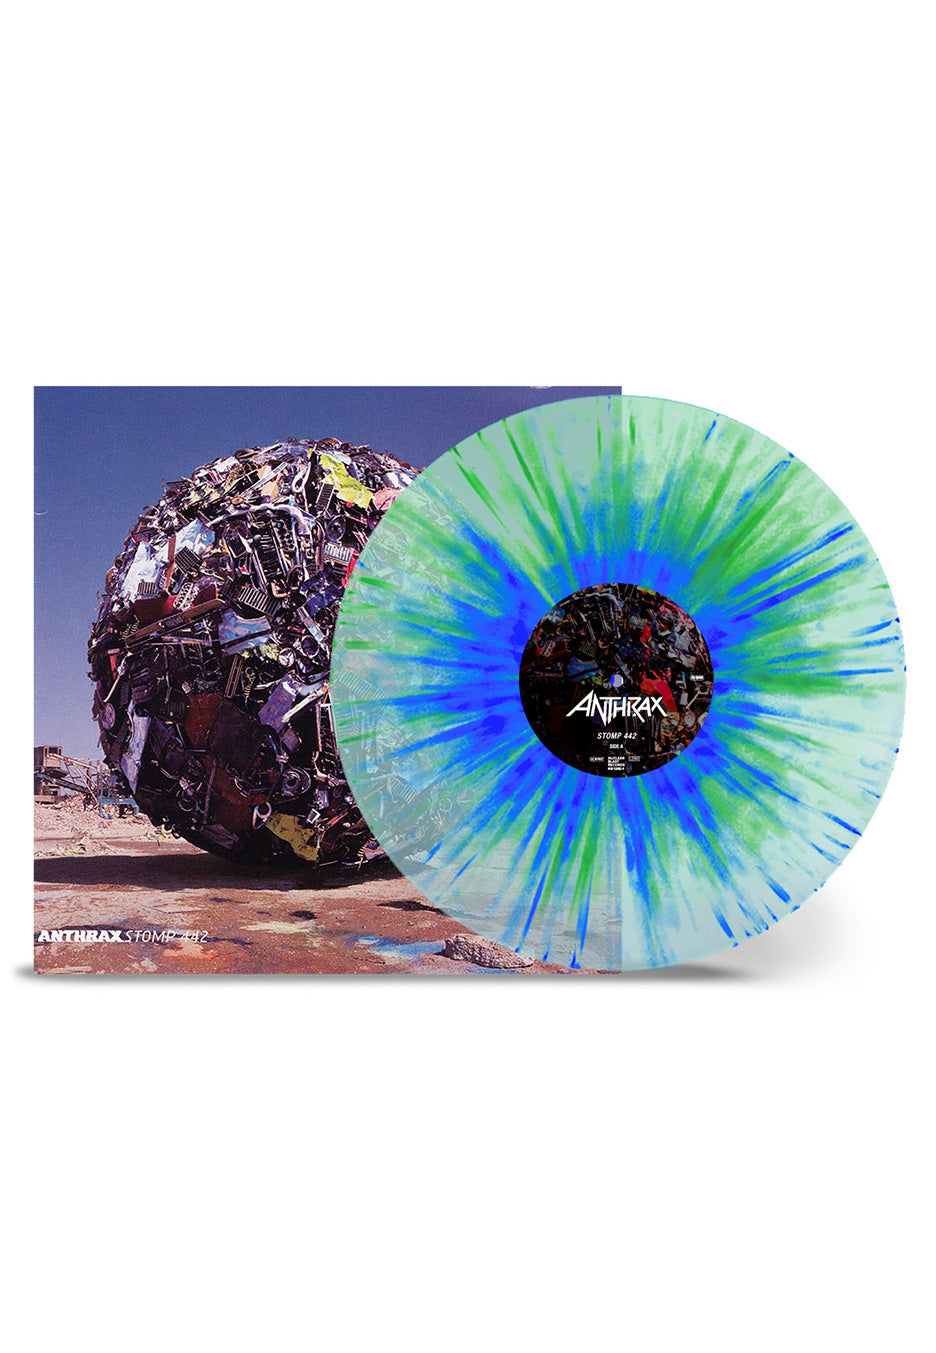 Anthrax - Stomp 442 Ltd. Clear/Blue/Green - Splatter Vinyl